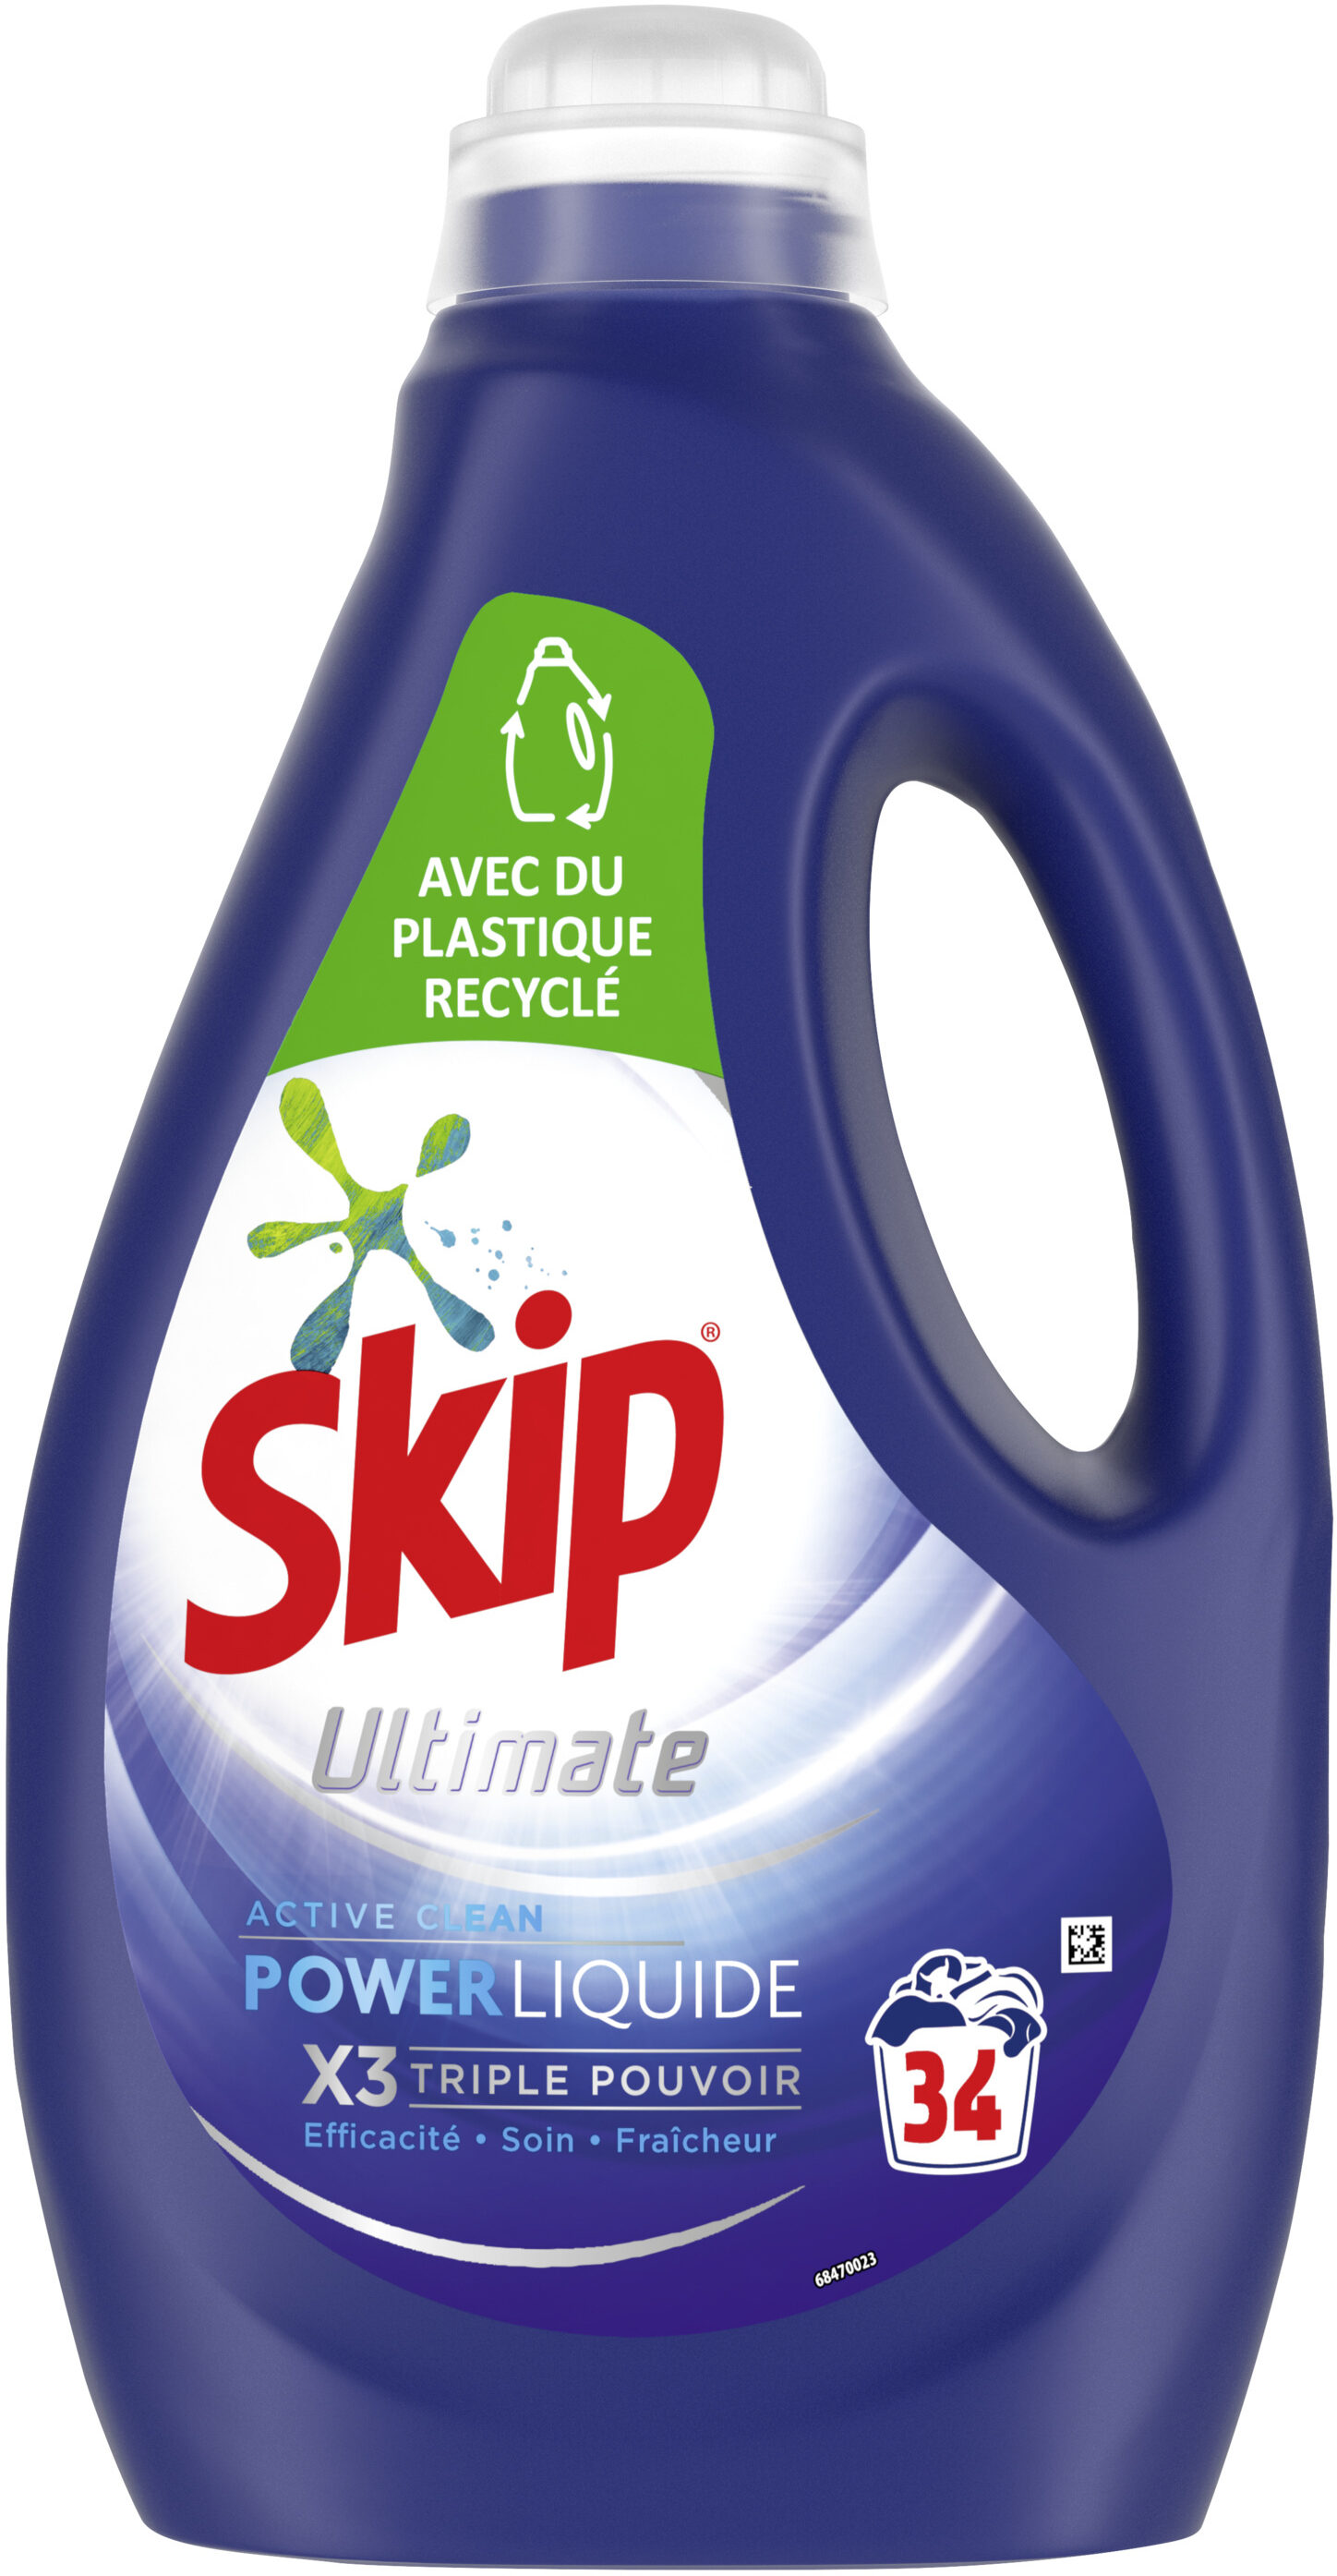 Active Clean - Lessive liquide Ultimate Skip - Intermarché